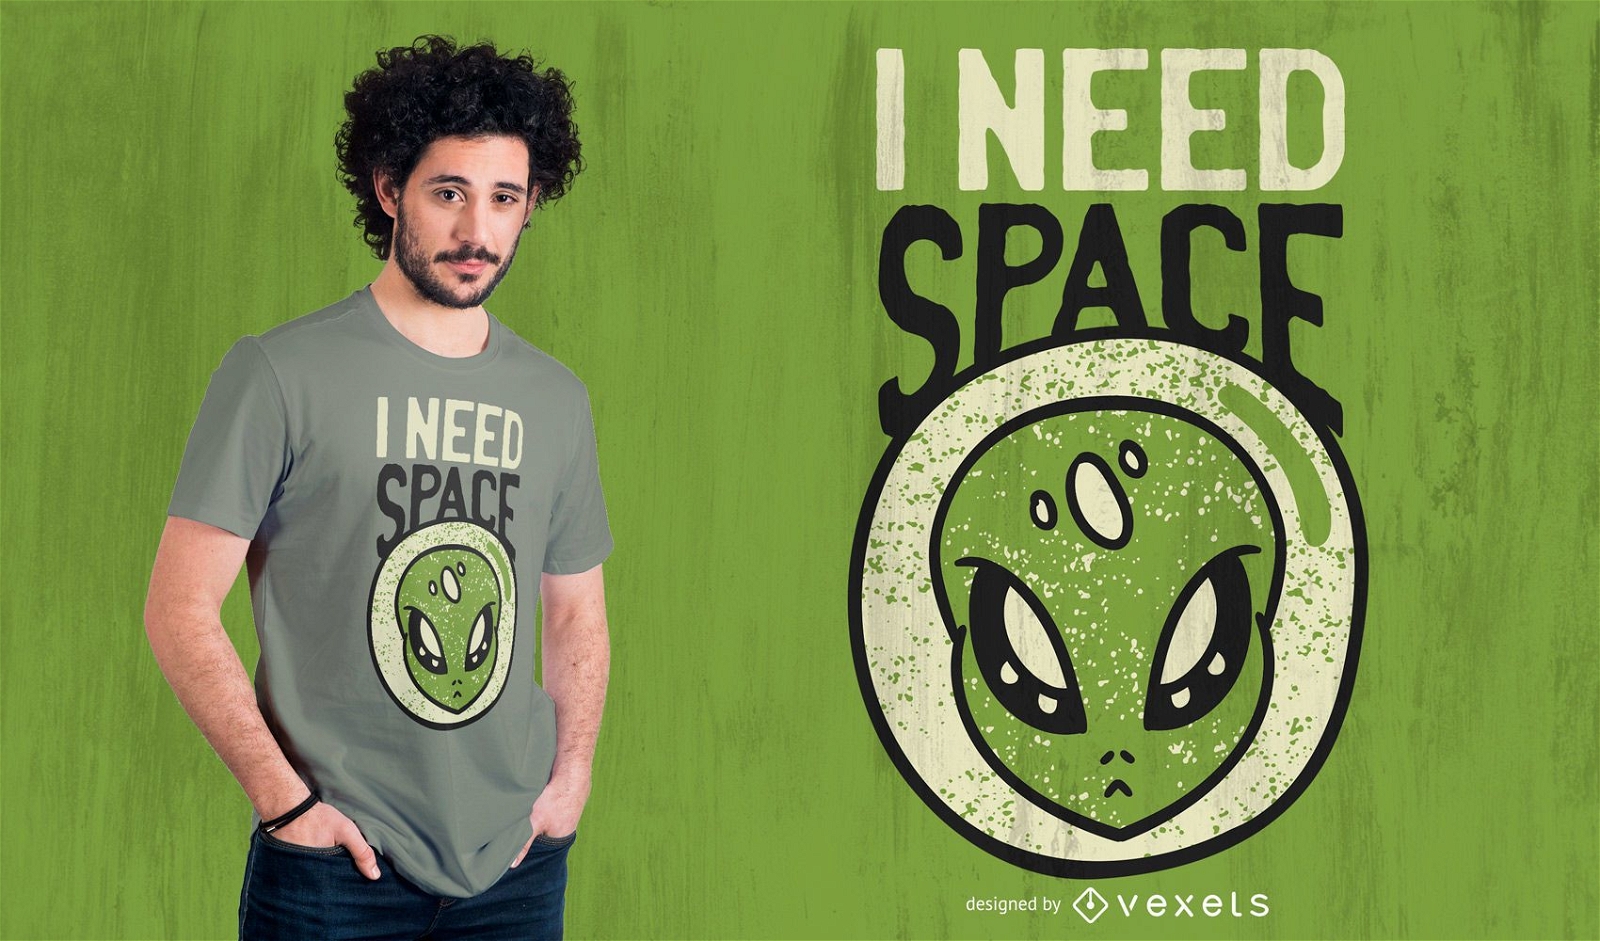 Precisa de design de camiseta alien?gena espacial